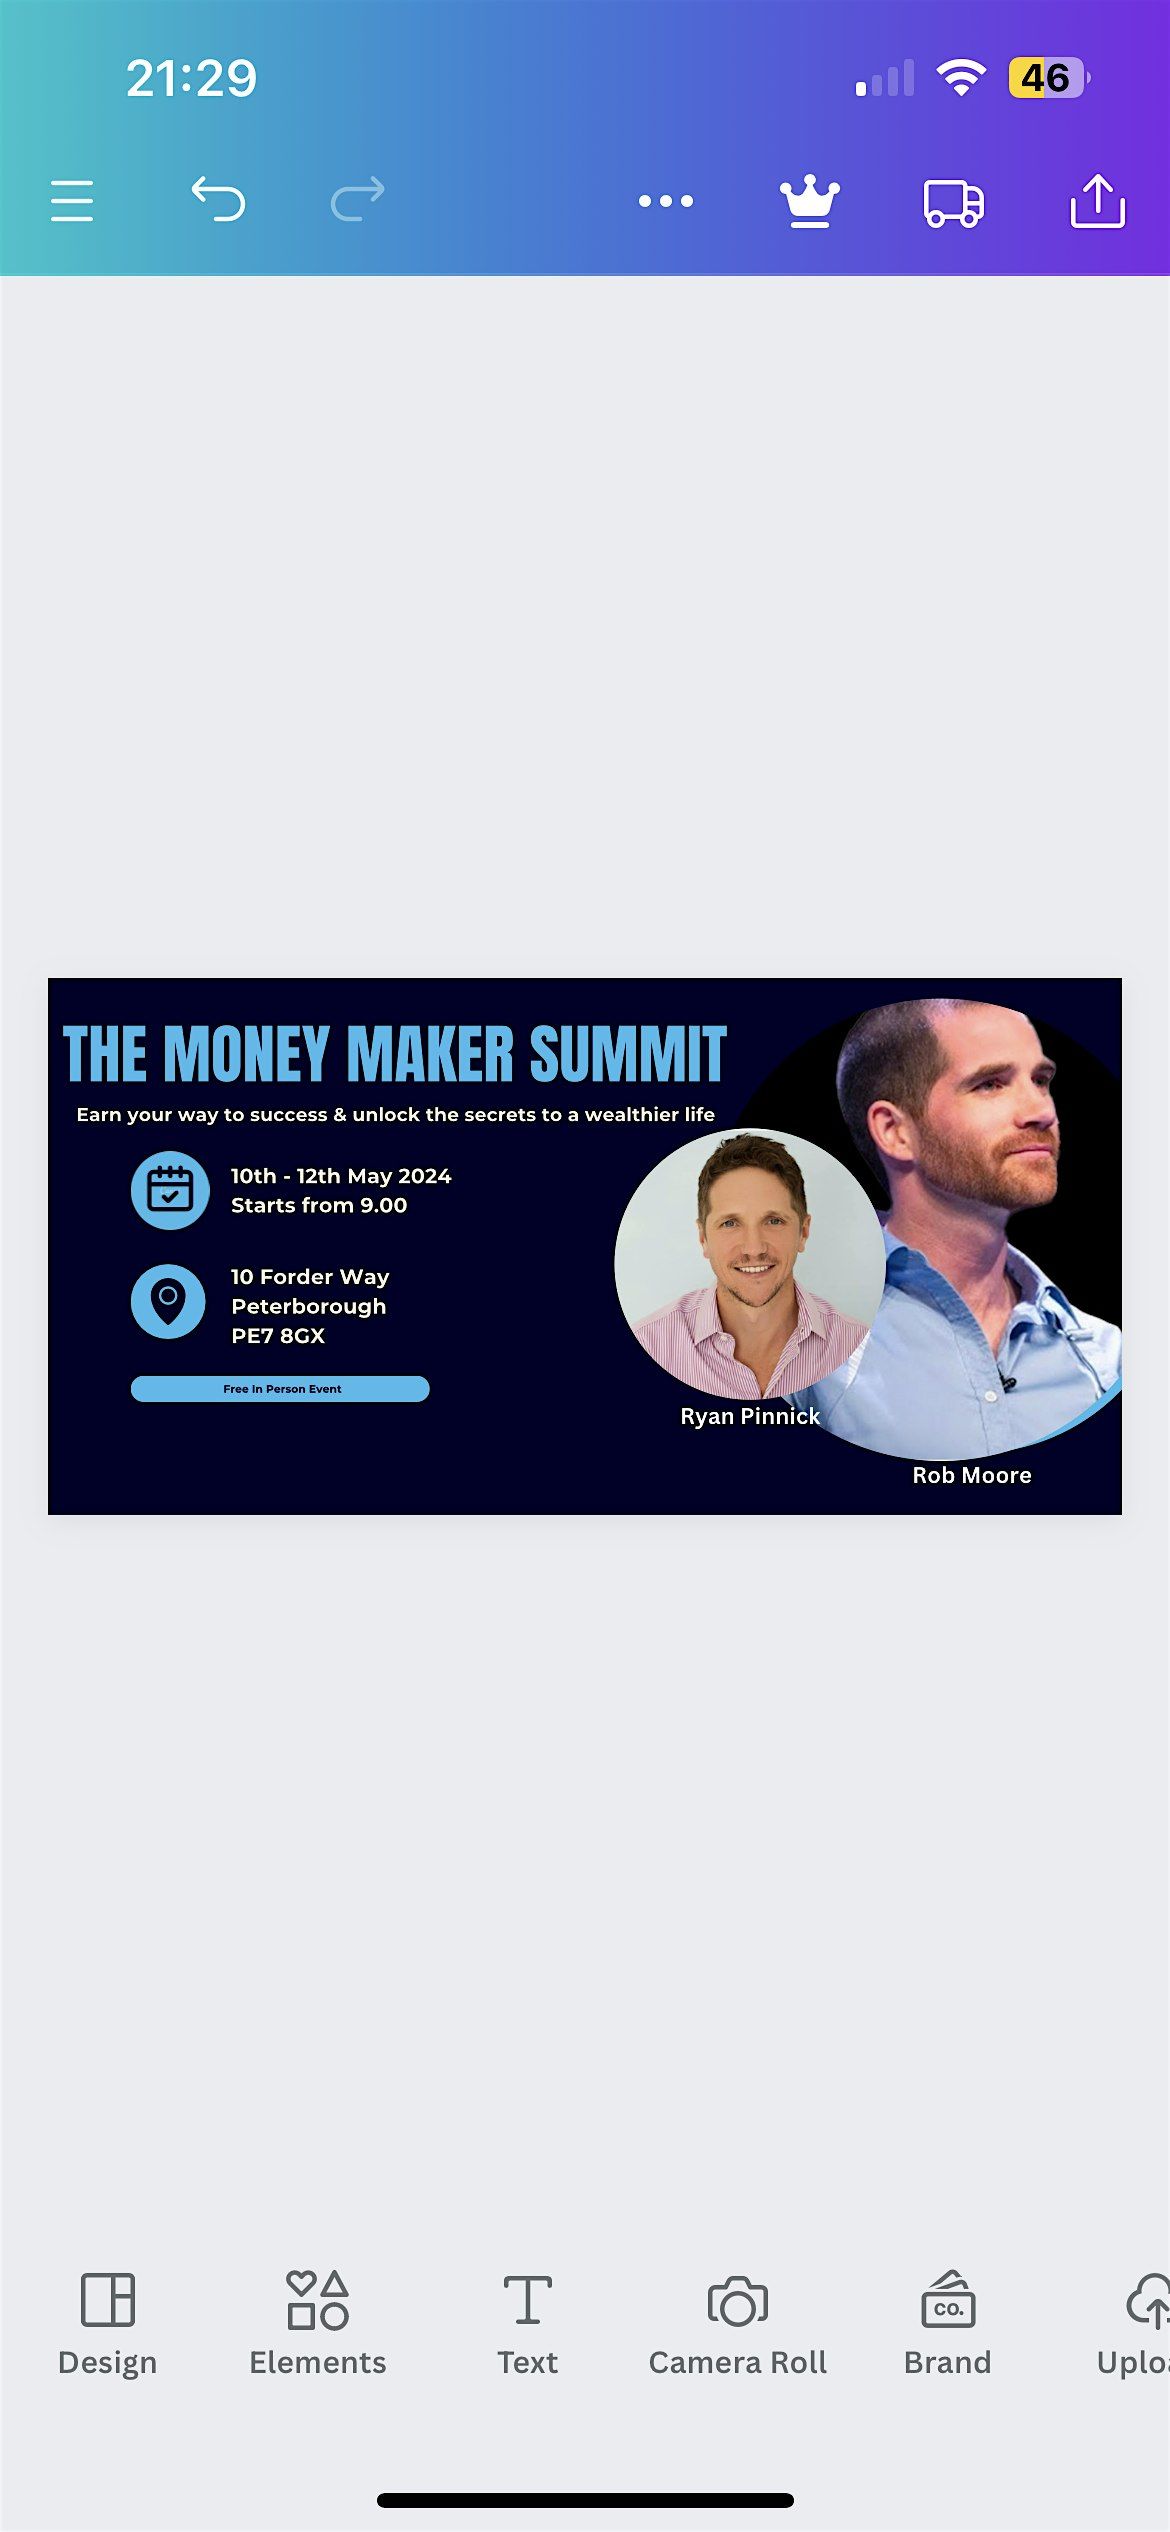 The Money Maker Summit PETERBOROUGH